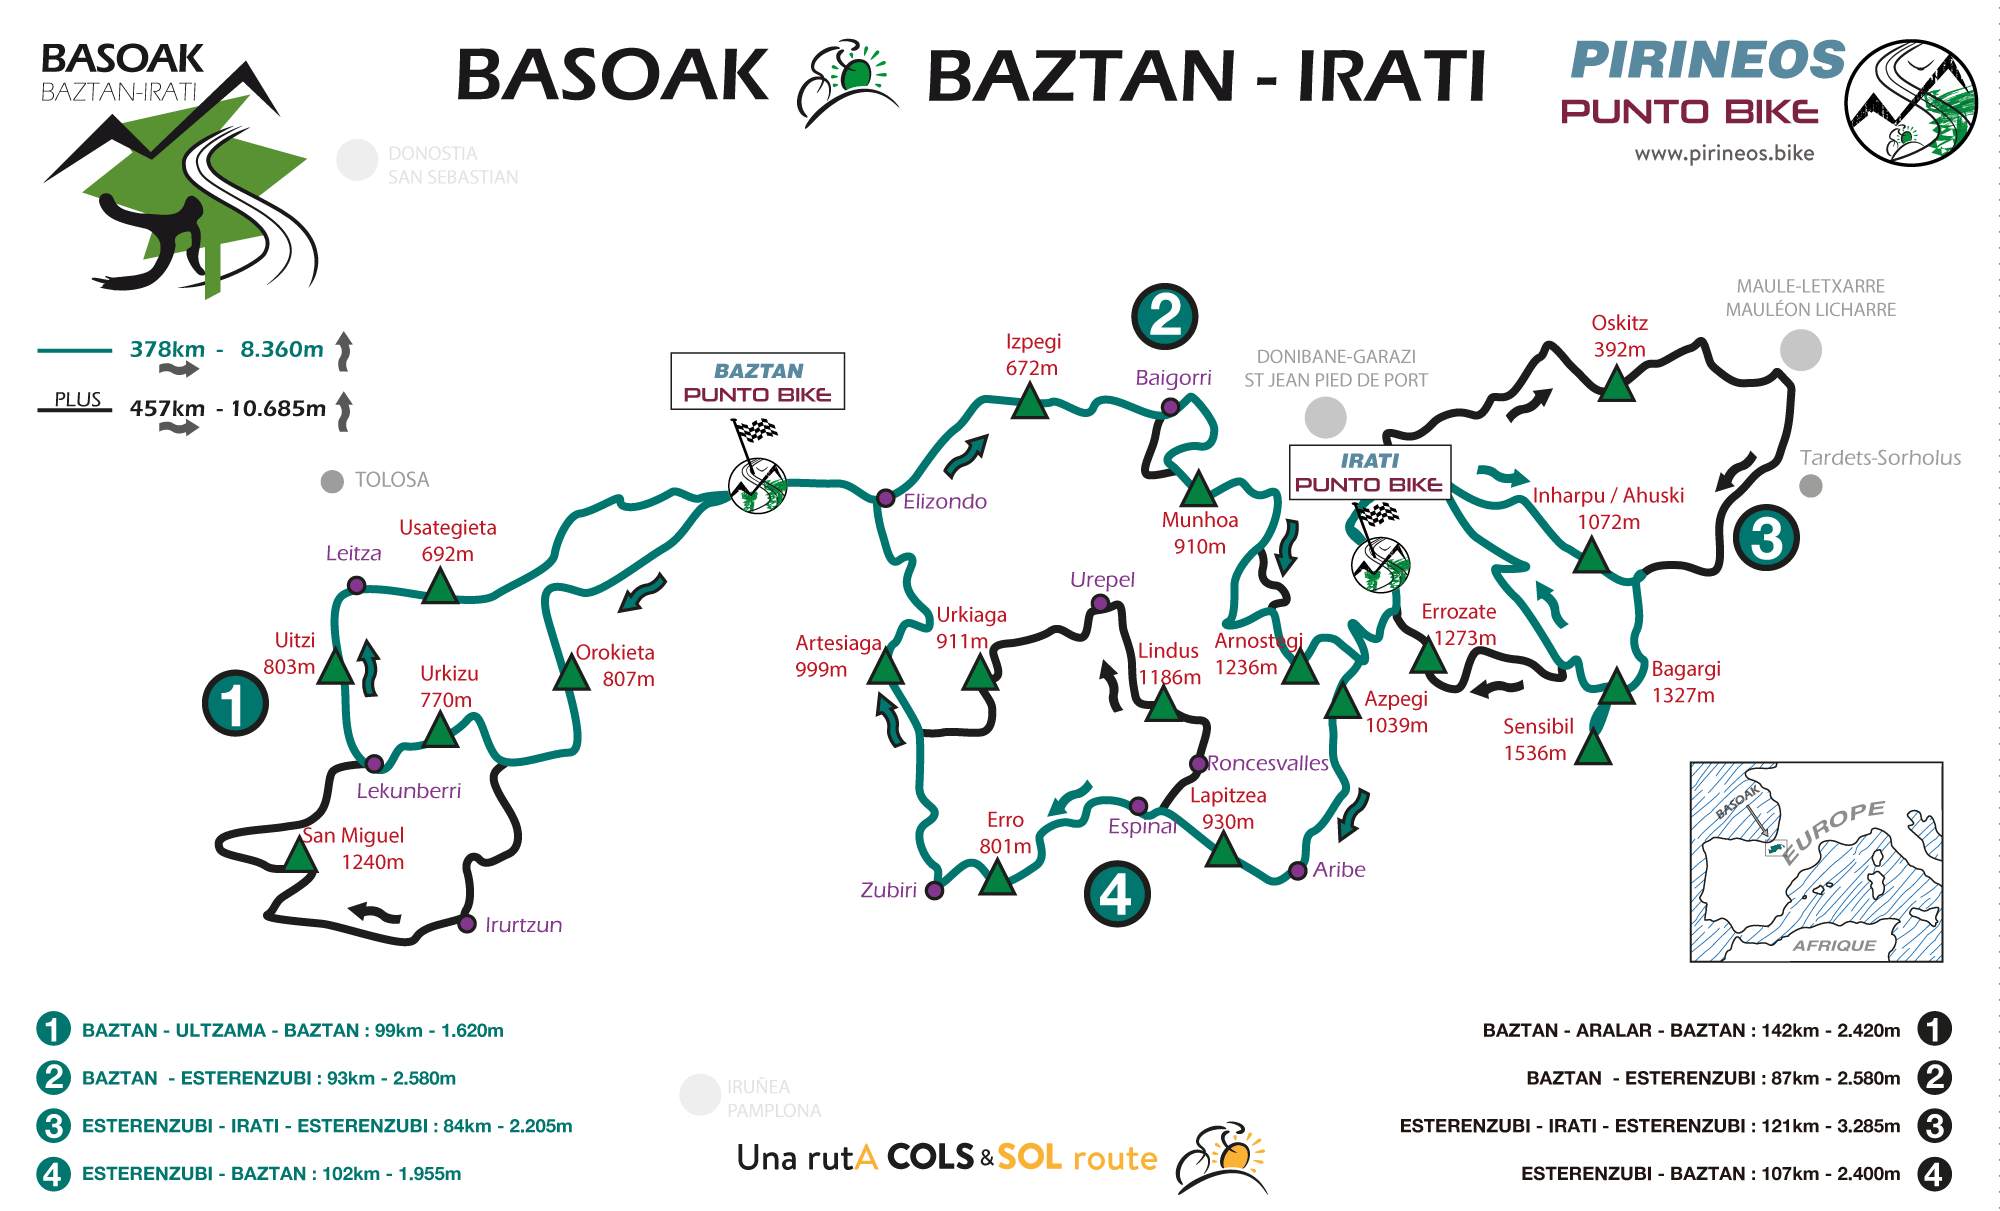 Mapa Basoak Baztan Irati